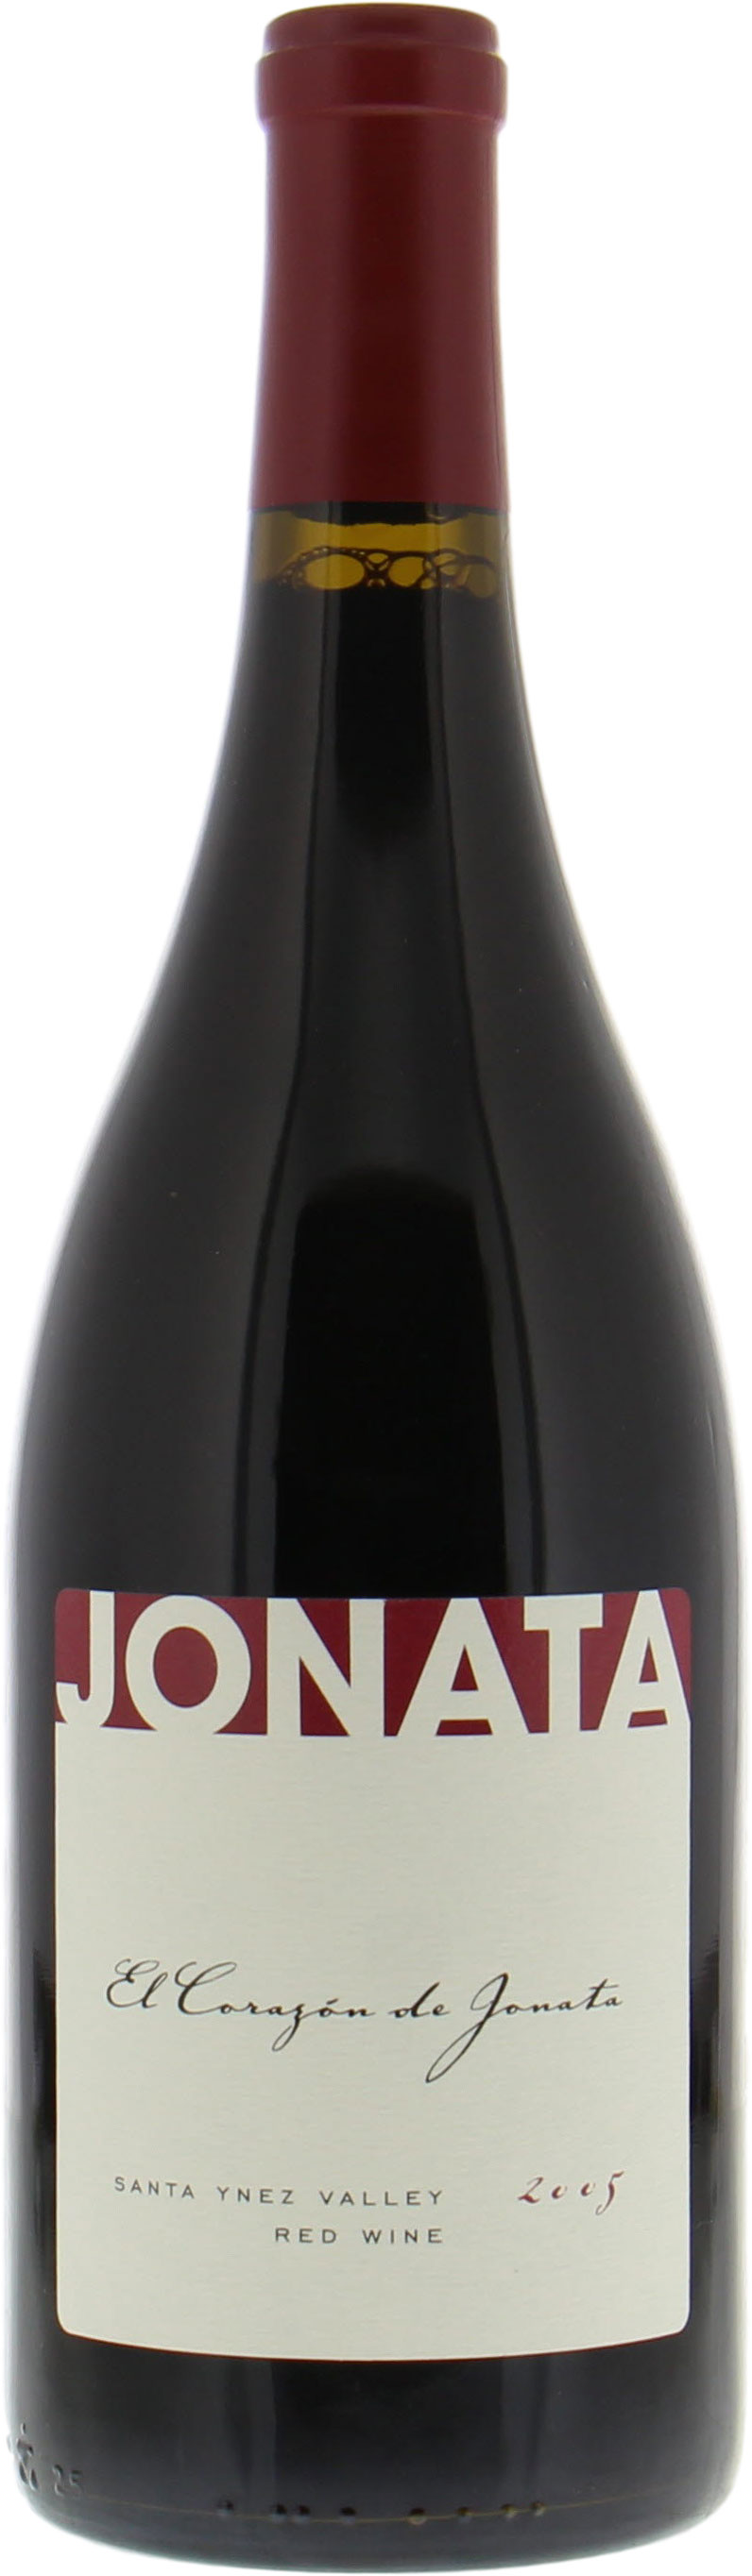 Jonata - El Corazon de Jonata 2005 Perfect